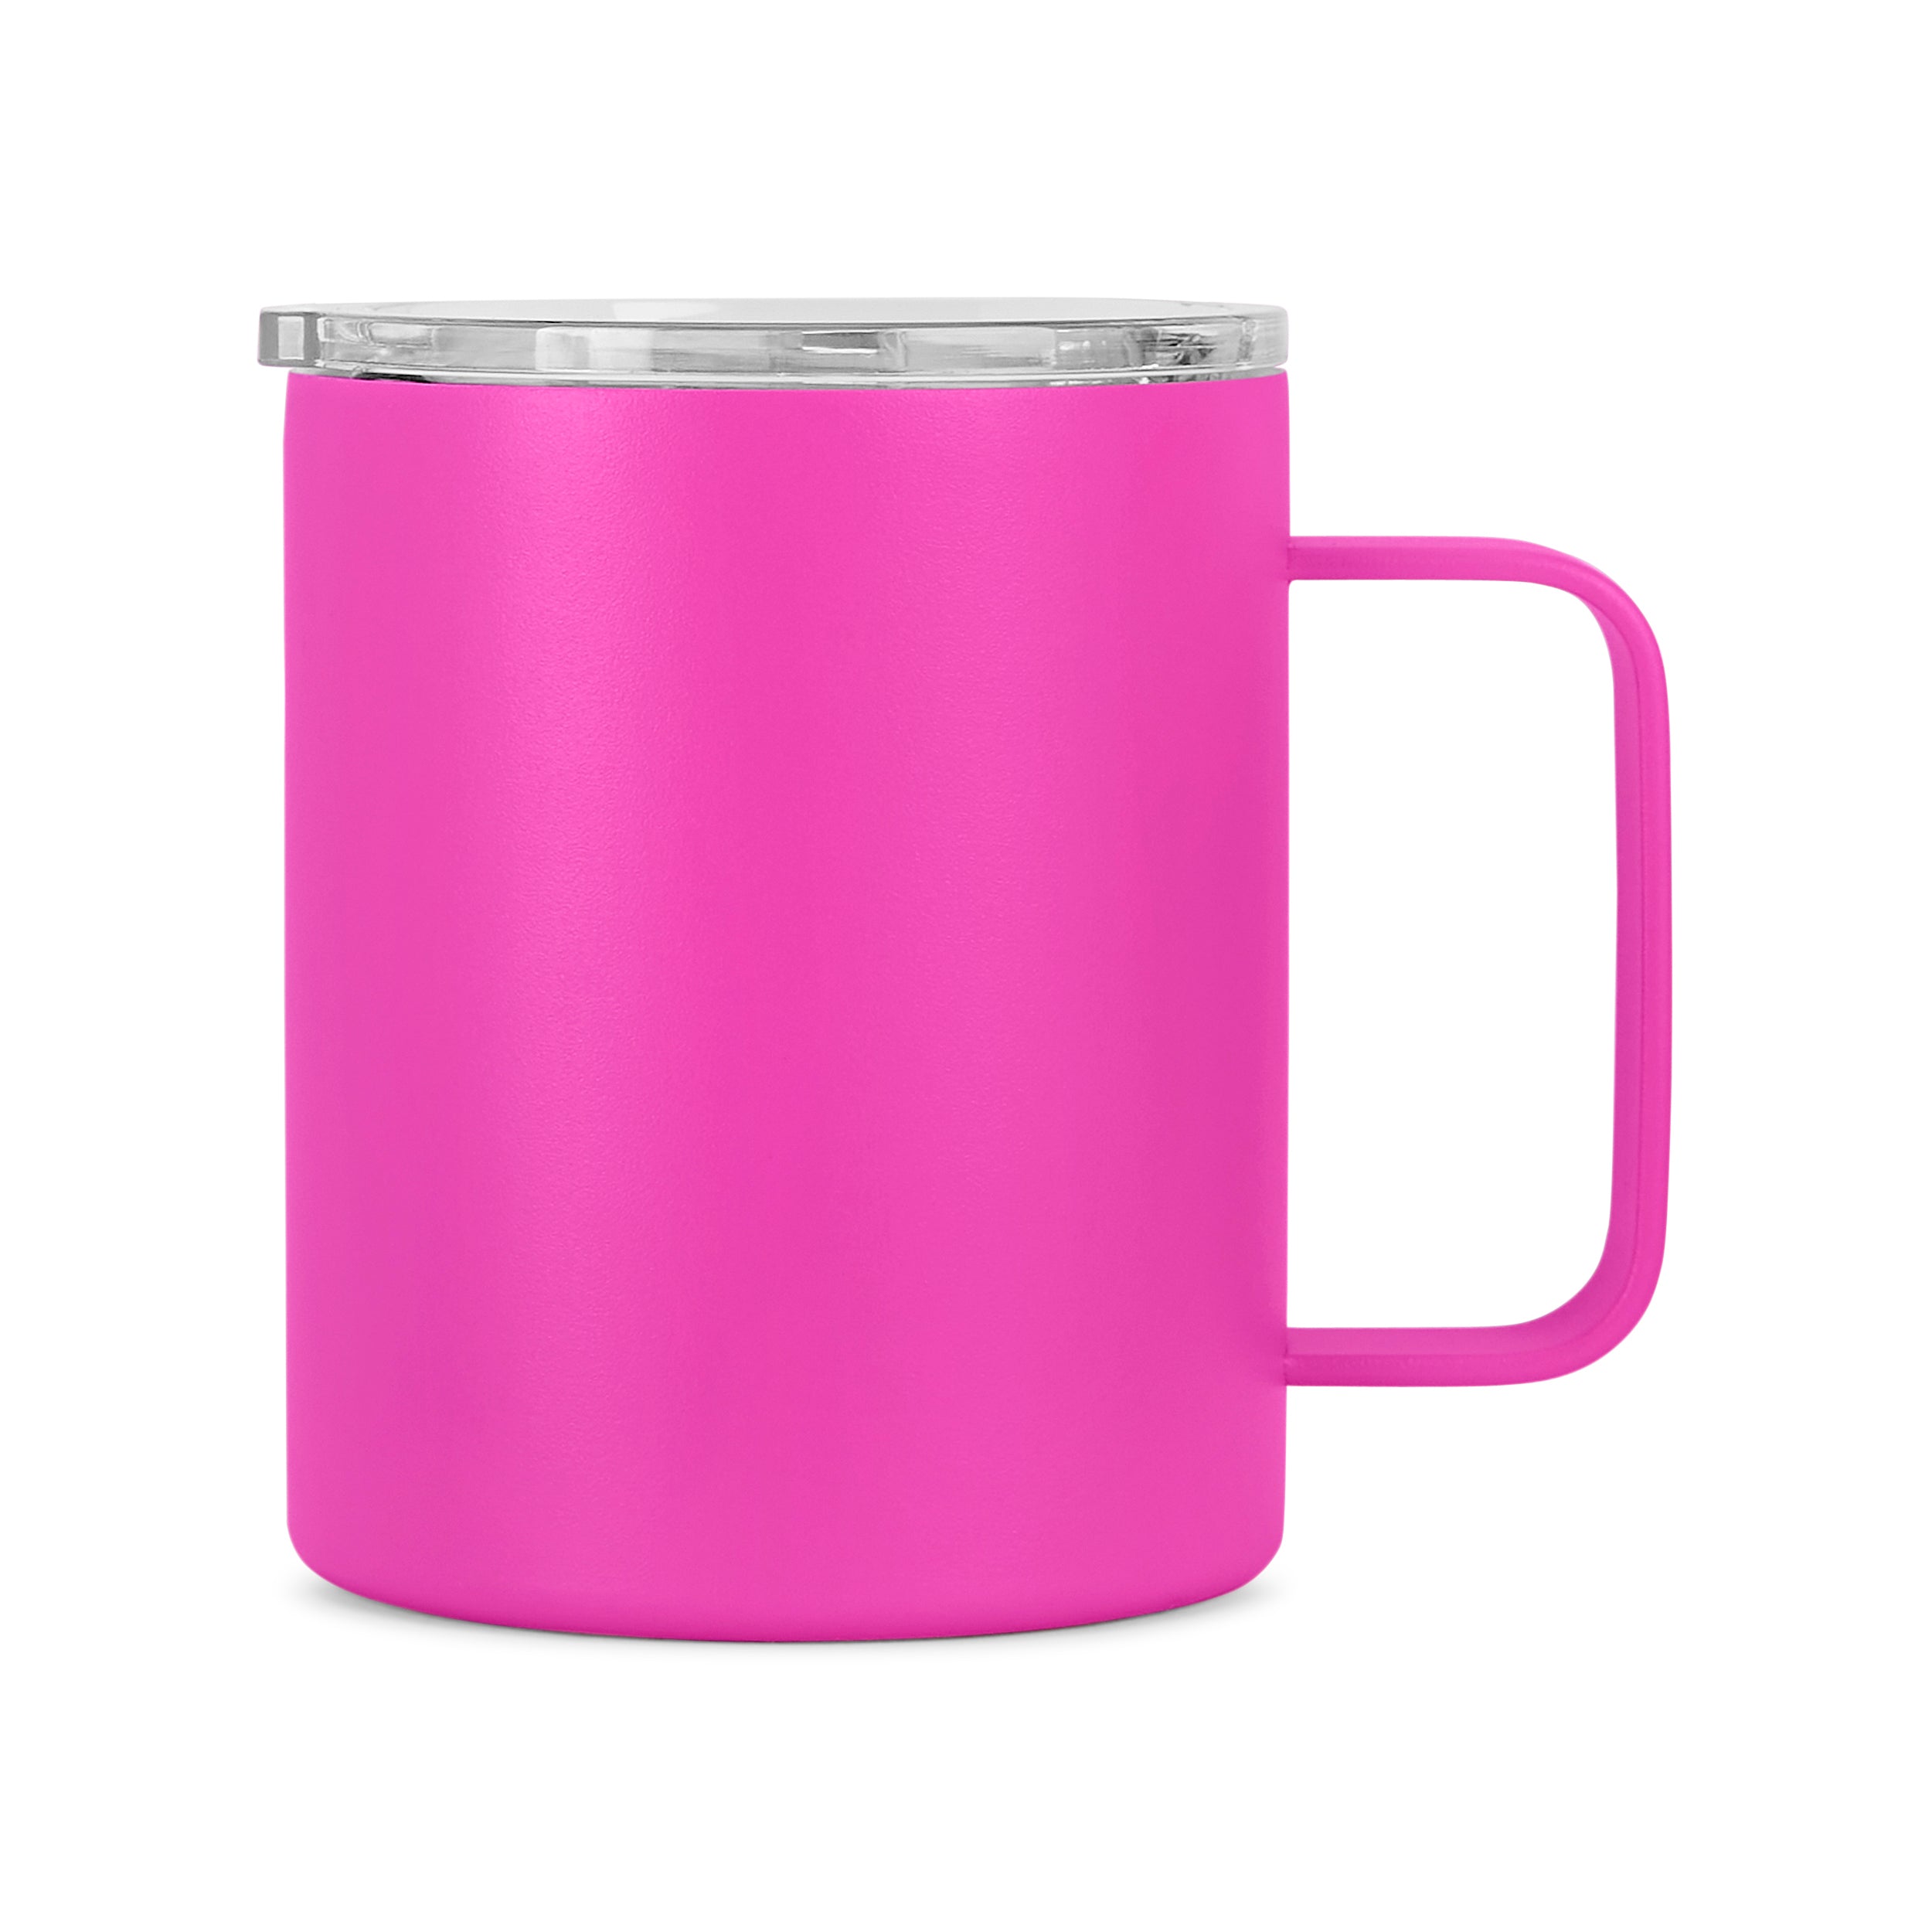 12 oz Cycling-themed Coffe Mug